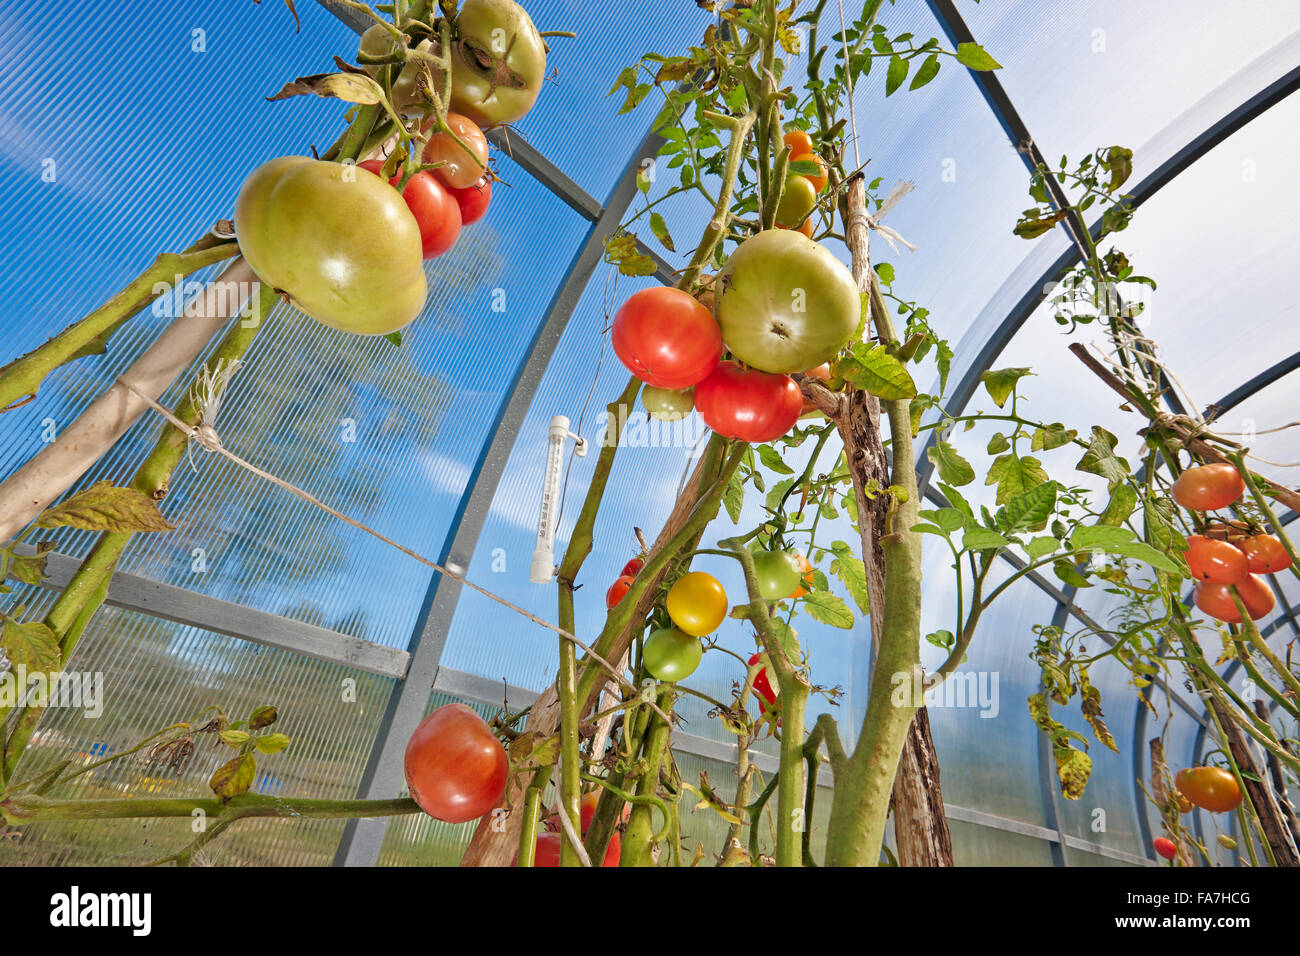 Tomatoes grow in organic greenhouse. Scientific name: Solanum lycopersicum. Kaluga region, Russia. Stock Photo